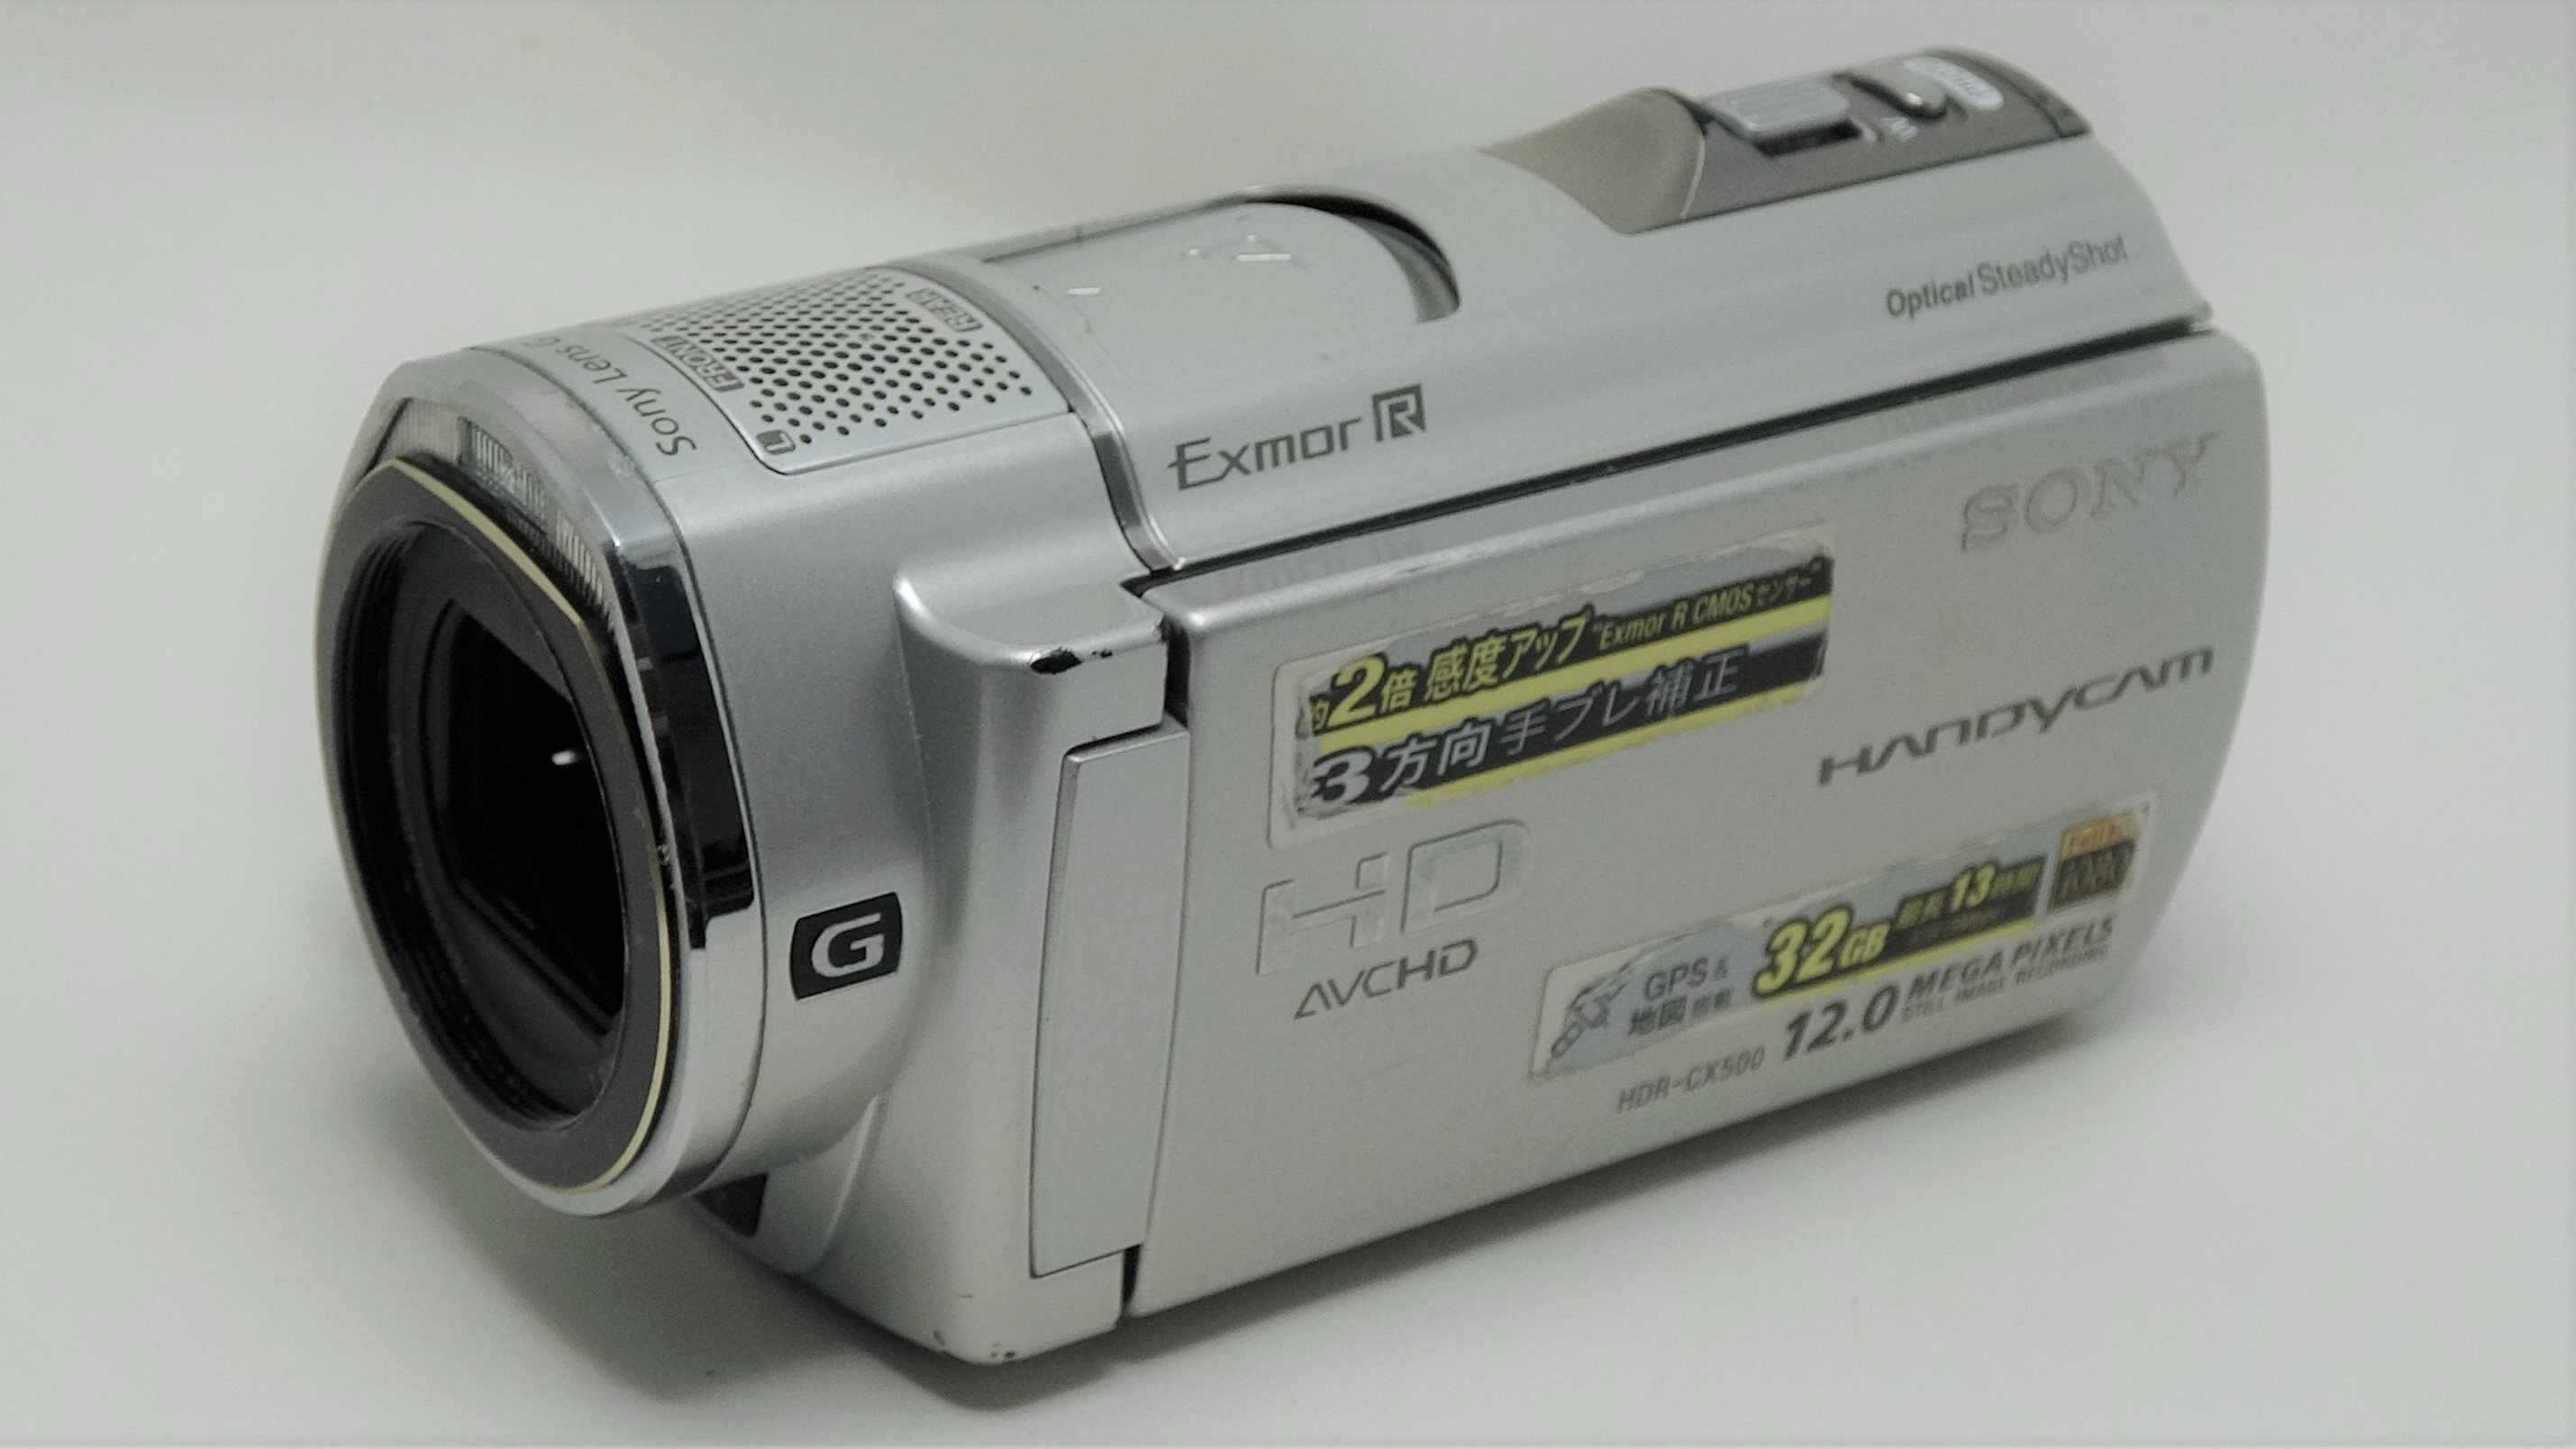 HDR-CX500V-Sony 削除したビデオの復活